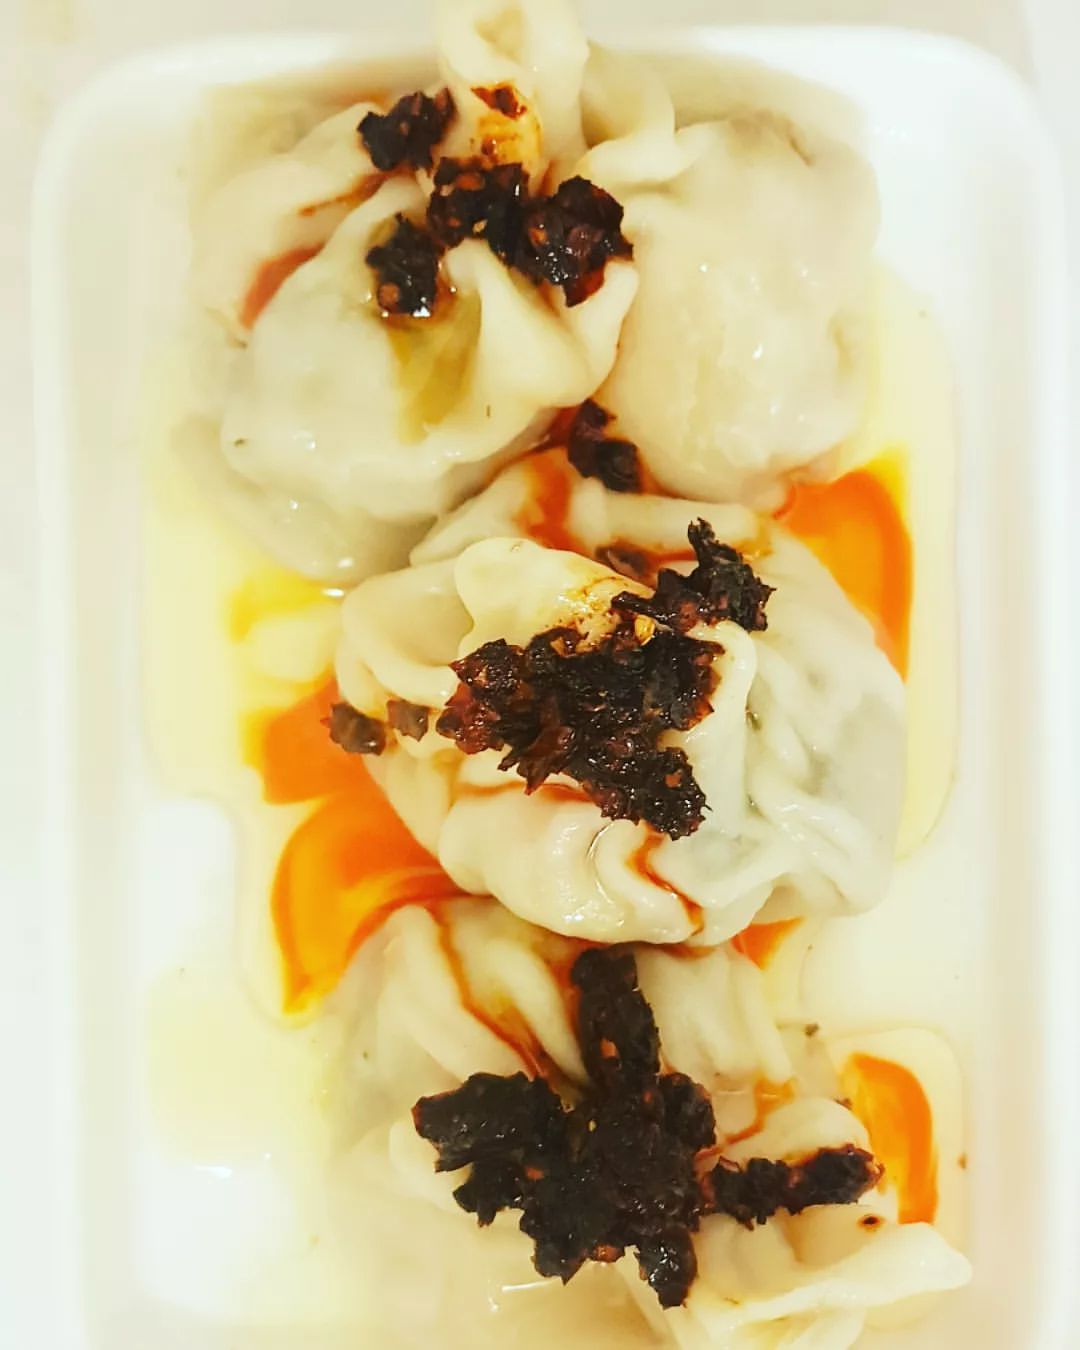 Happy Chinese New Year and home made dumplings. #dumplings #dimsum #chinesefood #food #cooking #chinesenewyear #GLIUPHOTO #photography #homemade
https://www.instagram.com/p/CZU5YVqMxpK/?utm_medium=tumblr